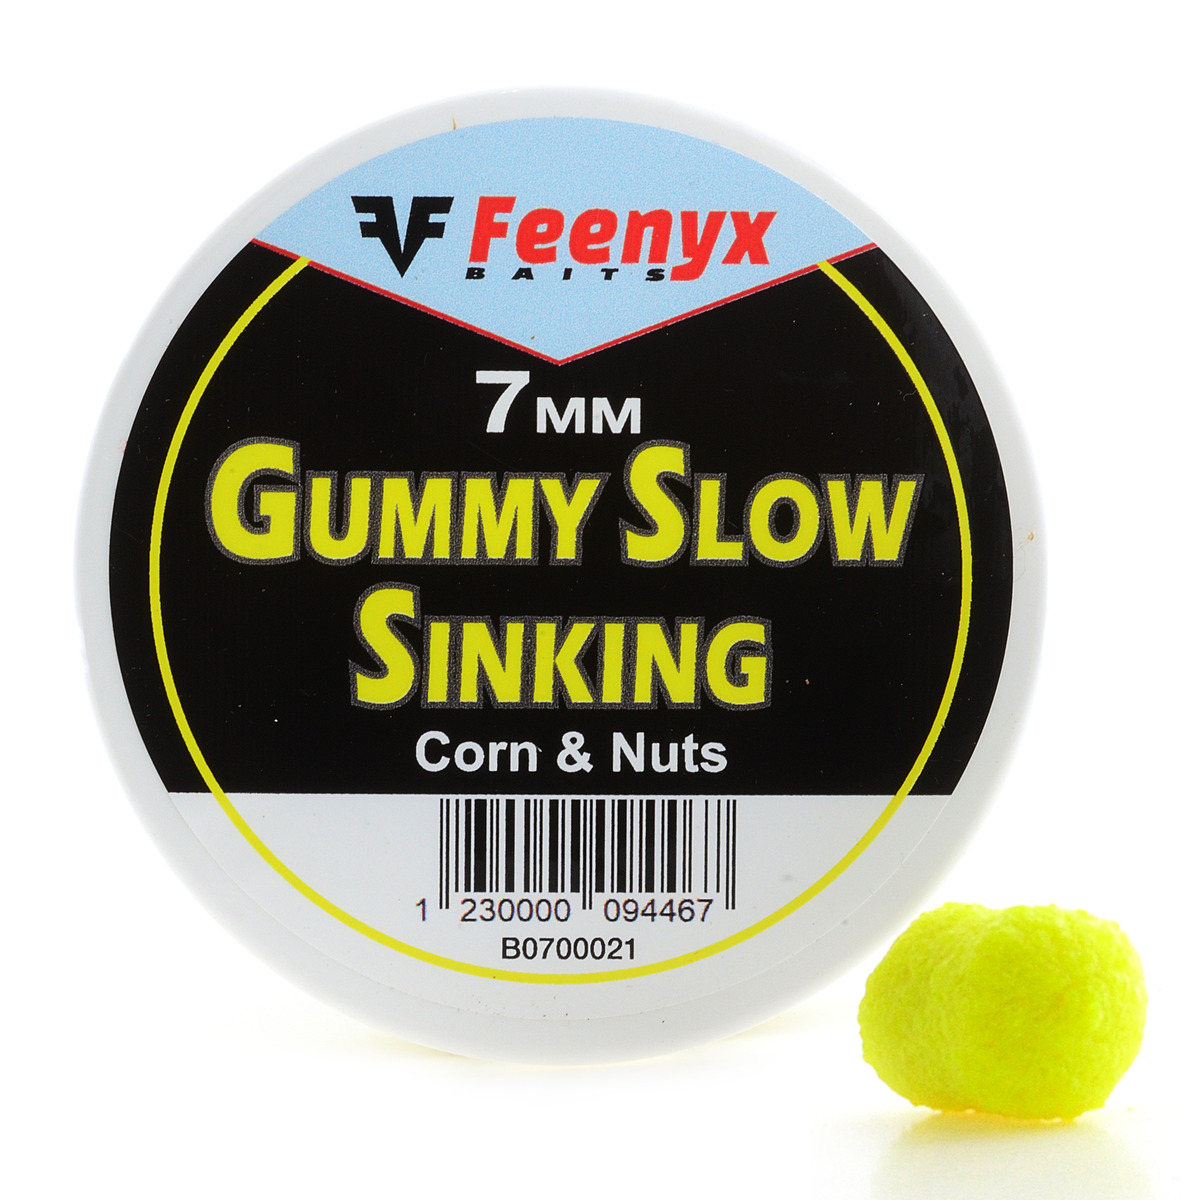 Feenyx Gummy Slow Sinking Corn & Nuts - 7 mm